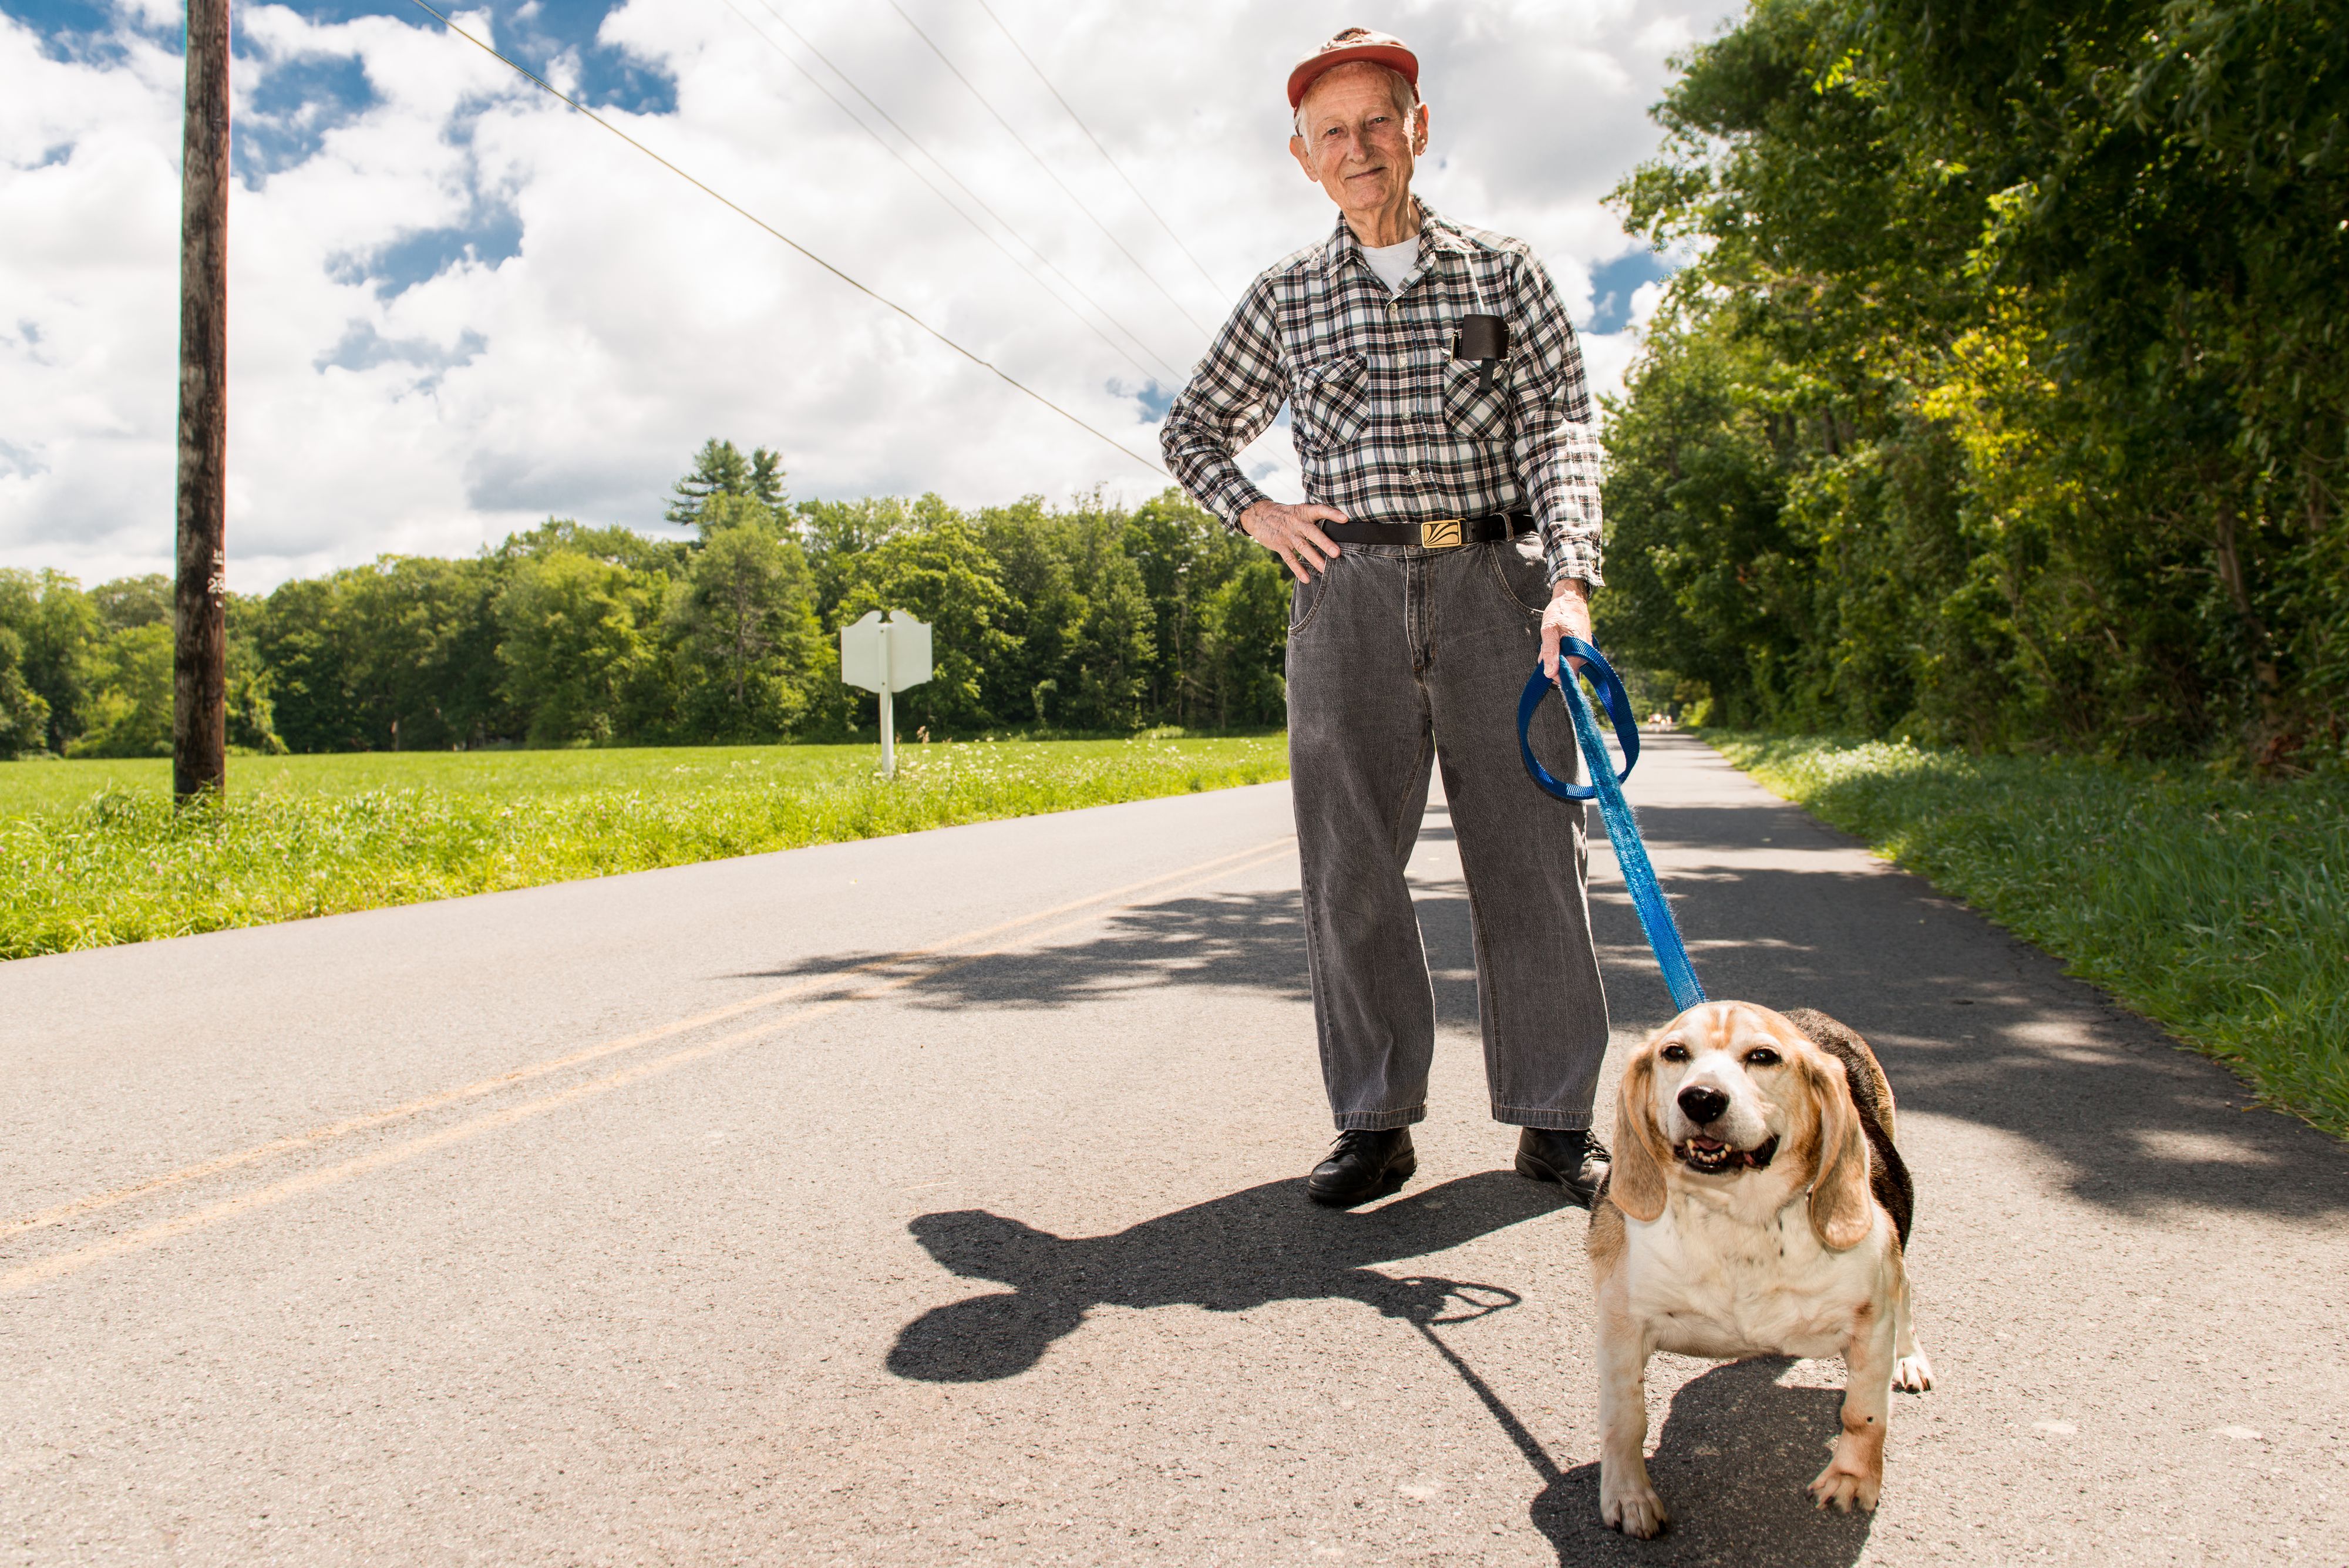 Old man in street in cap walking dog